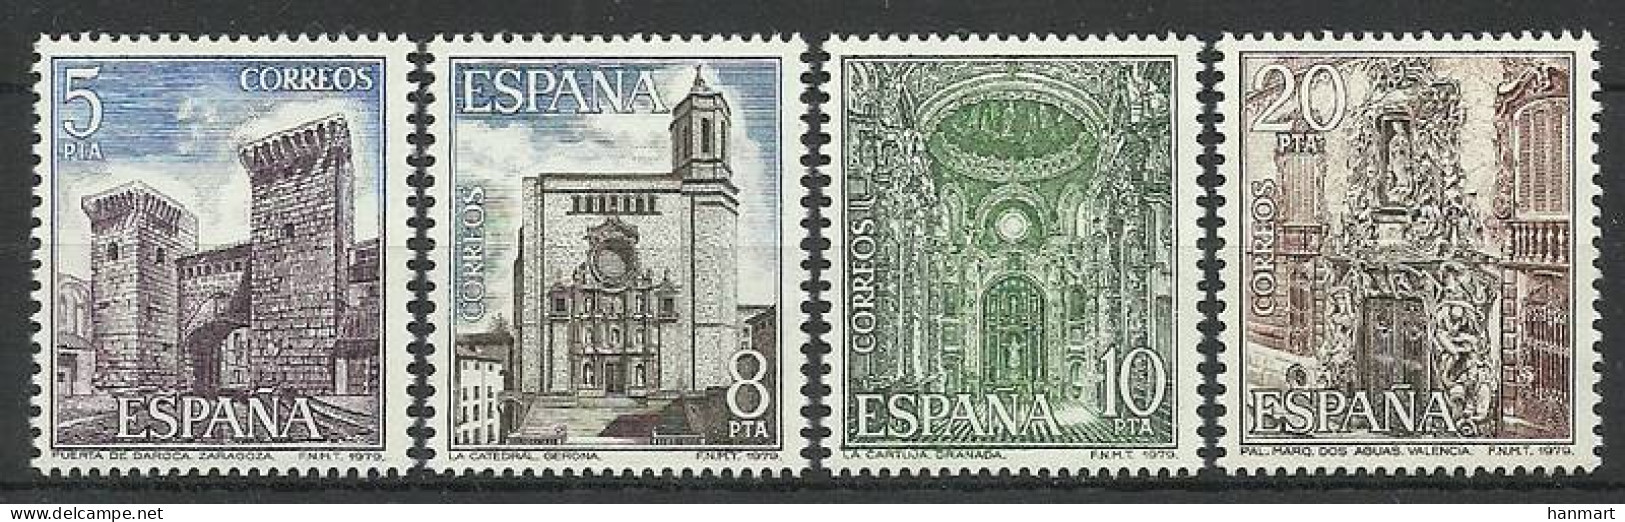 Spain 1979 Mi 2419-2422 MNH  (ZE1 SPN2419-2422) - Escultura